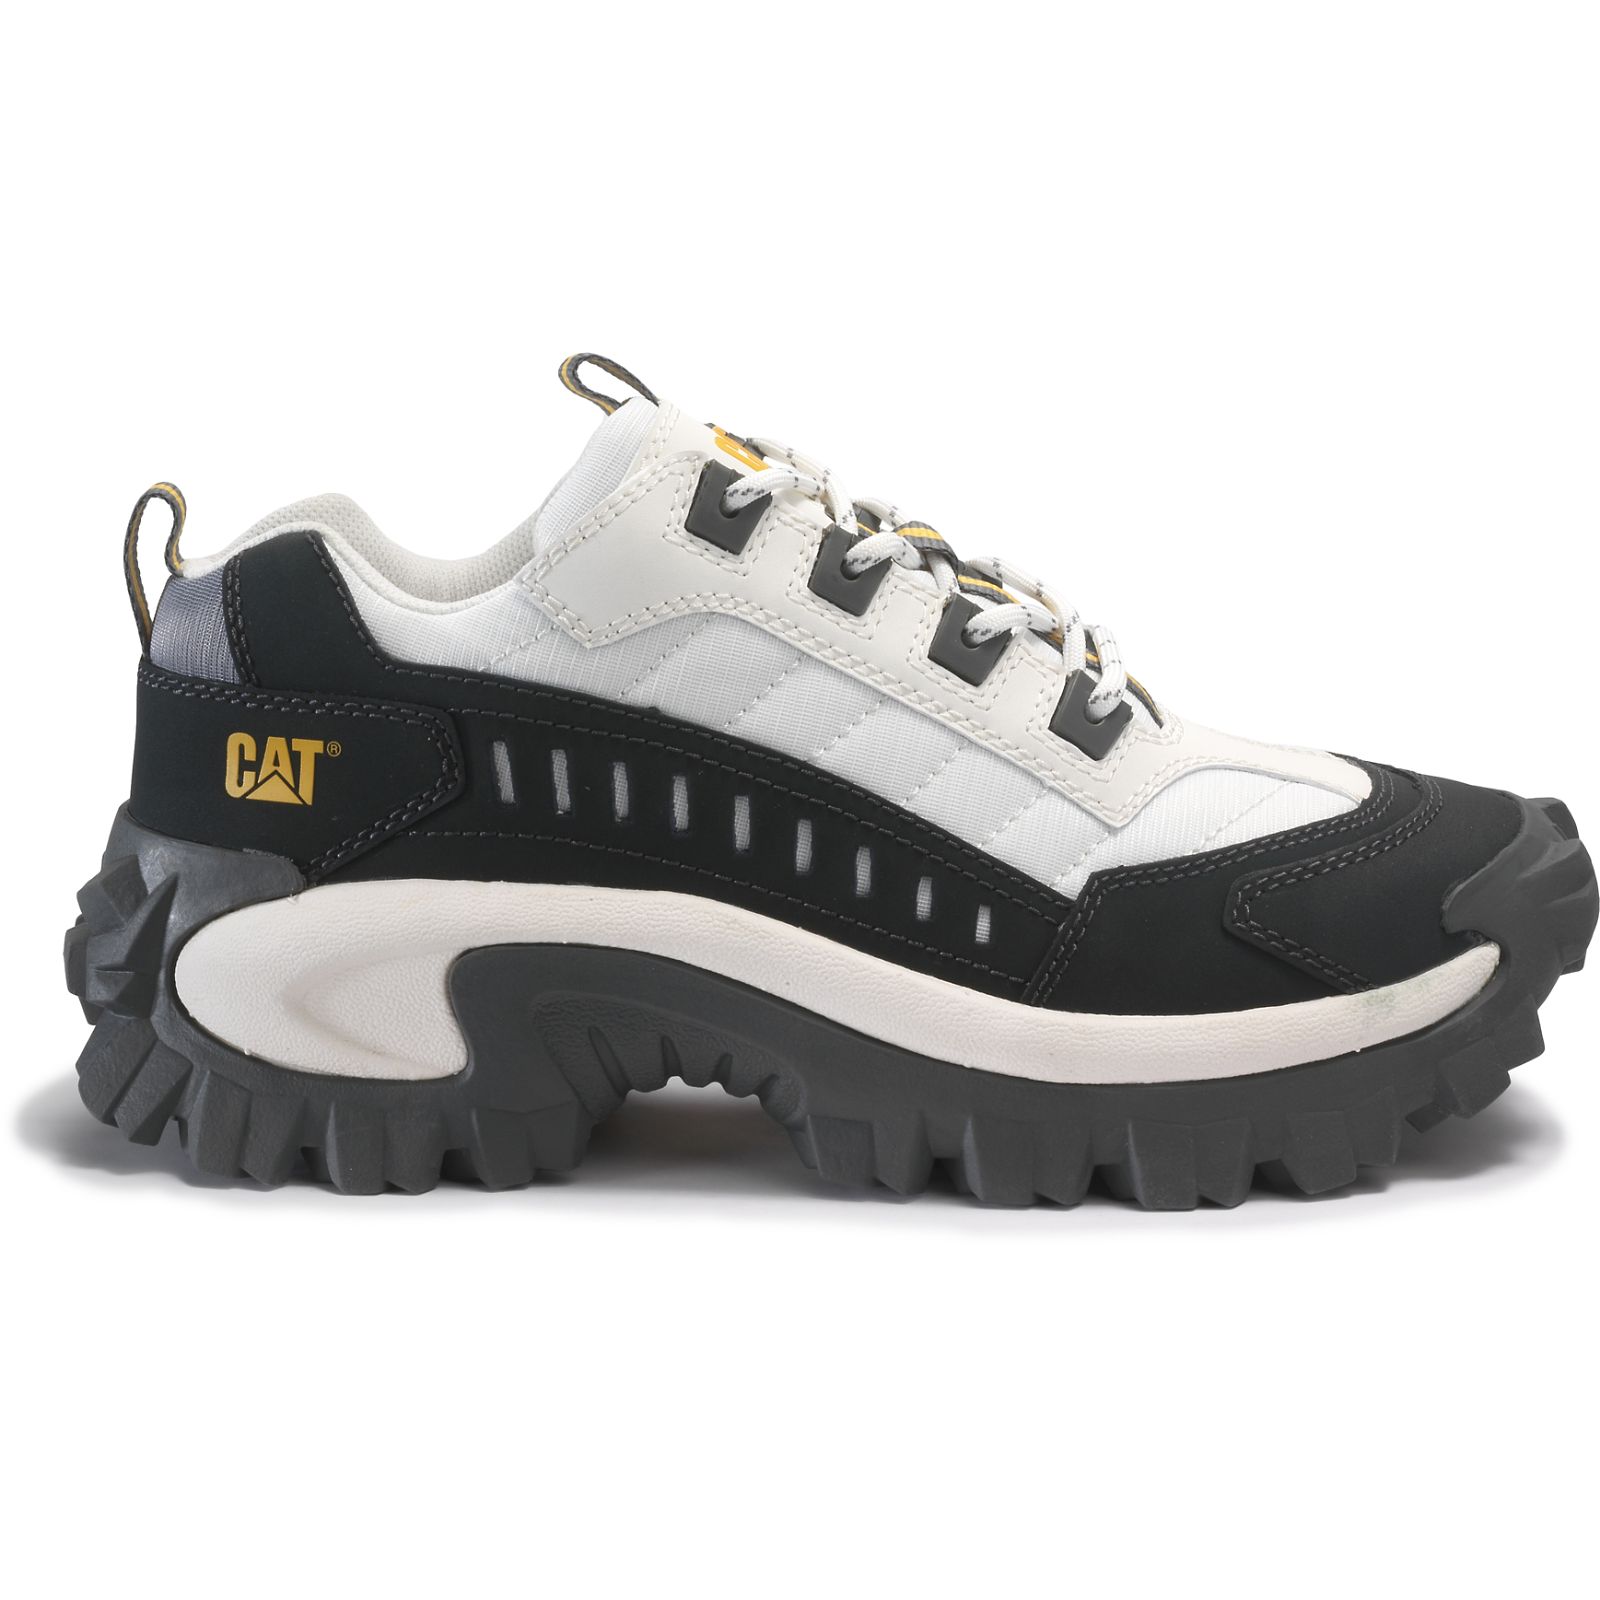 Caterpillar Casual Shoes Online UAE - Caterpillar Intruder Womens - Black VFSPHN803